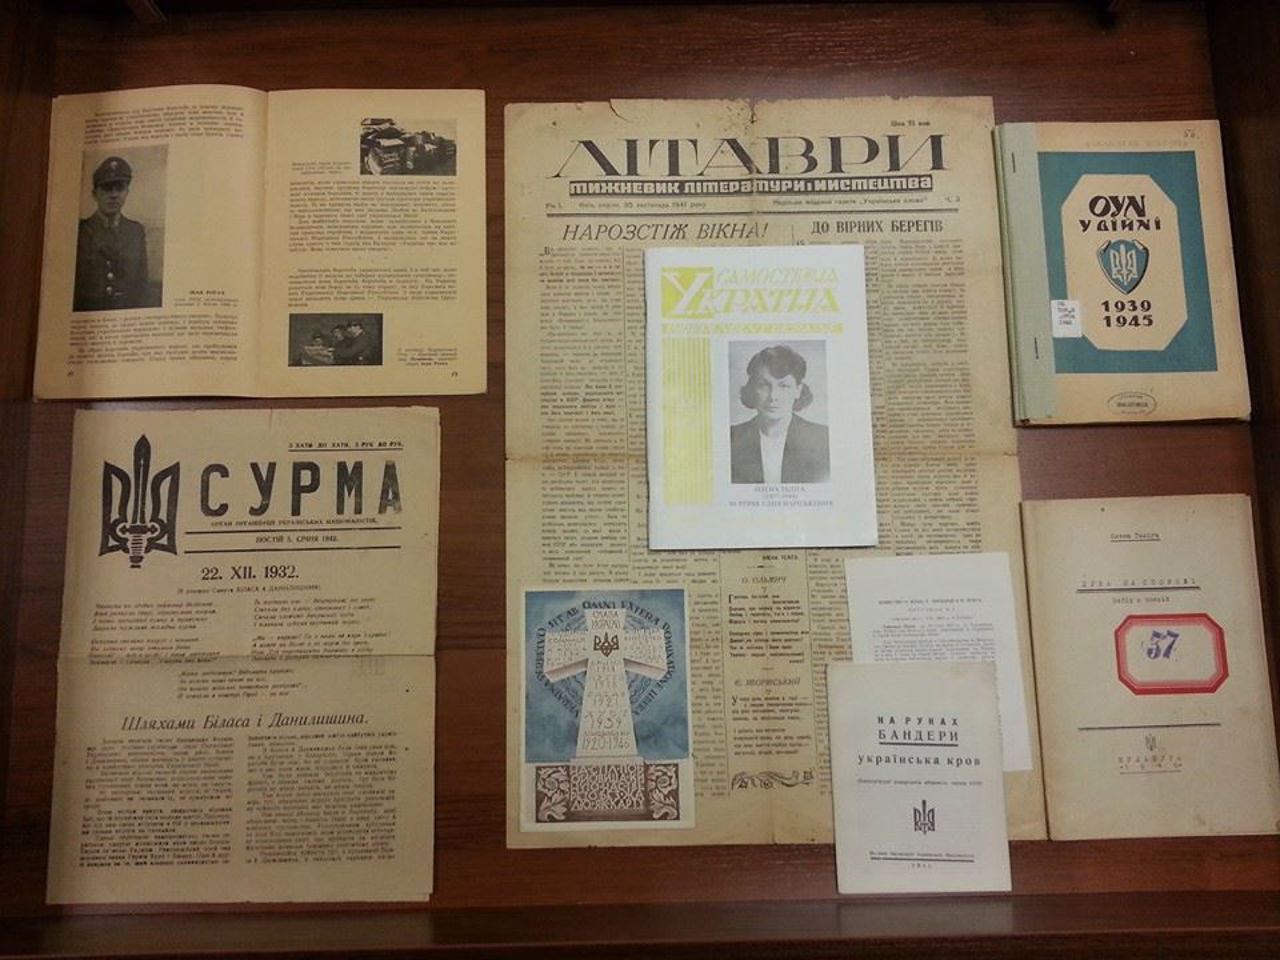 Press Museum-Archive, Kyiv